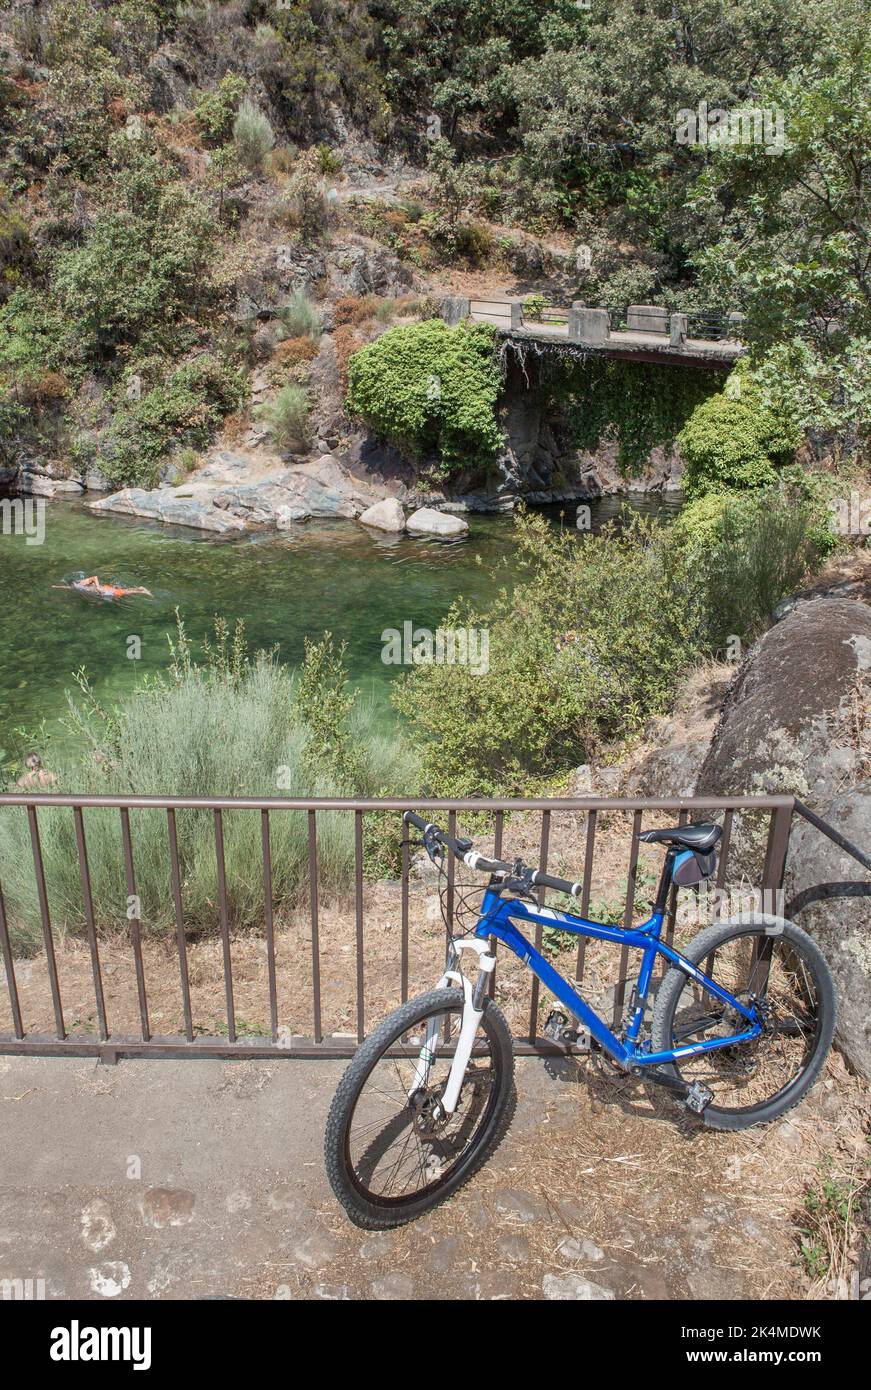 MTB-Fahrrad neben dem natürlichen Schwimmbad La Maquina, Guijo de Santa Barbara, Spanien. Toller Ort für Triathlon-Praktizierende. Stockfoto